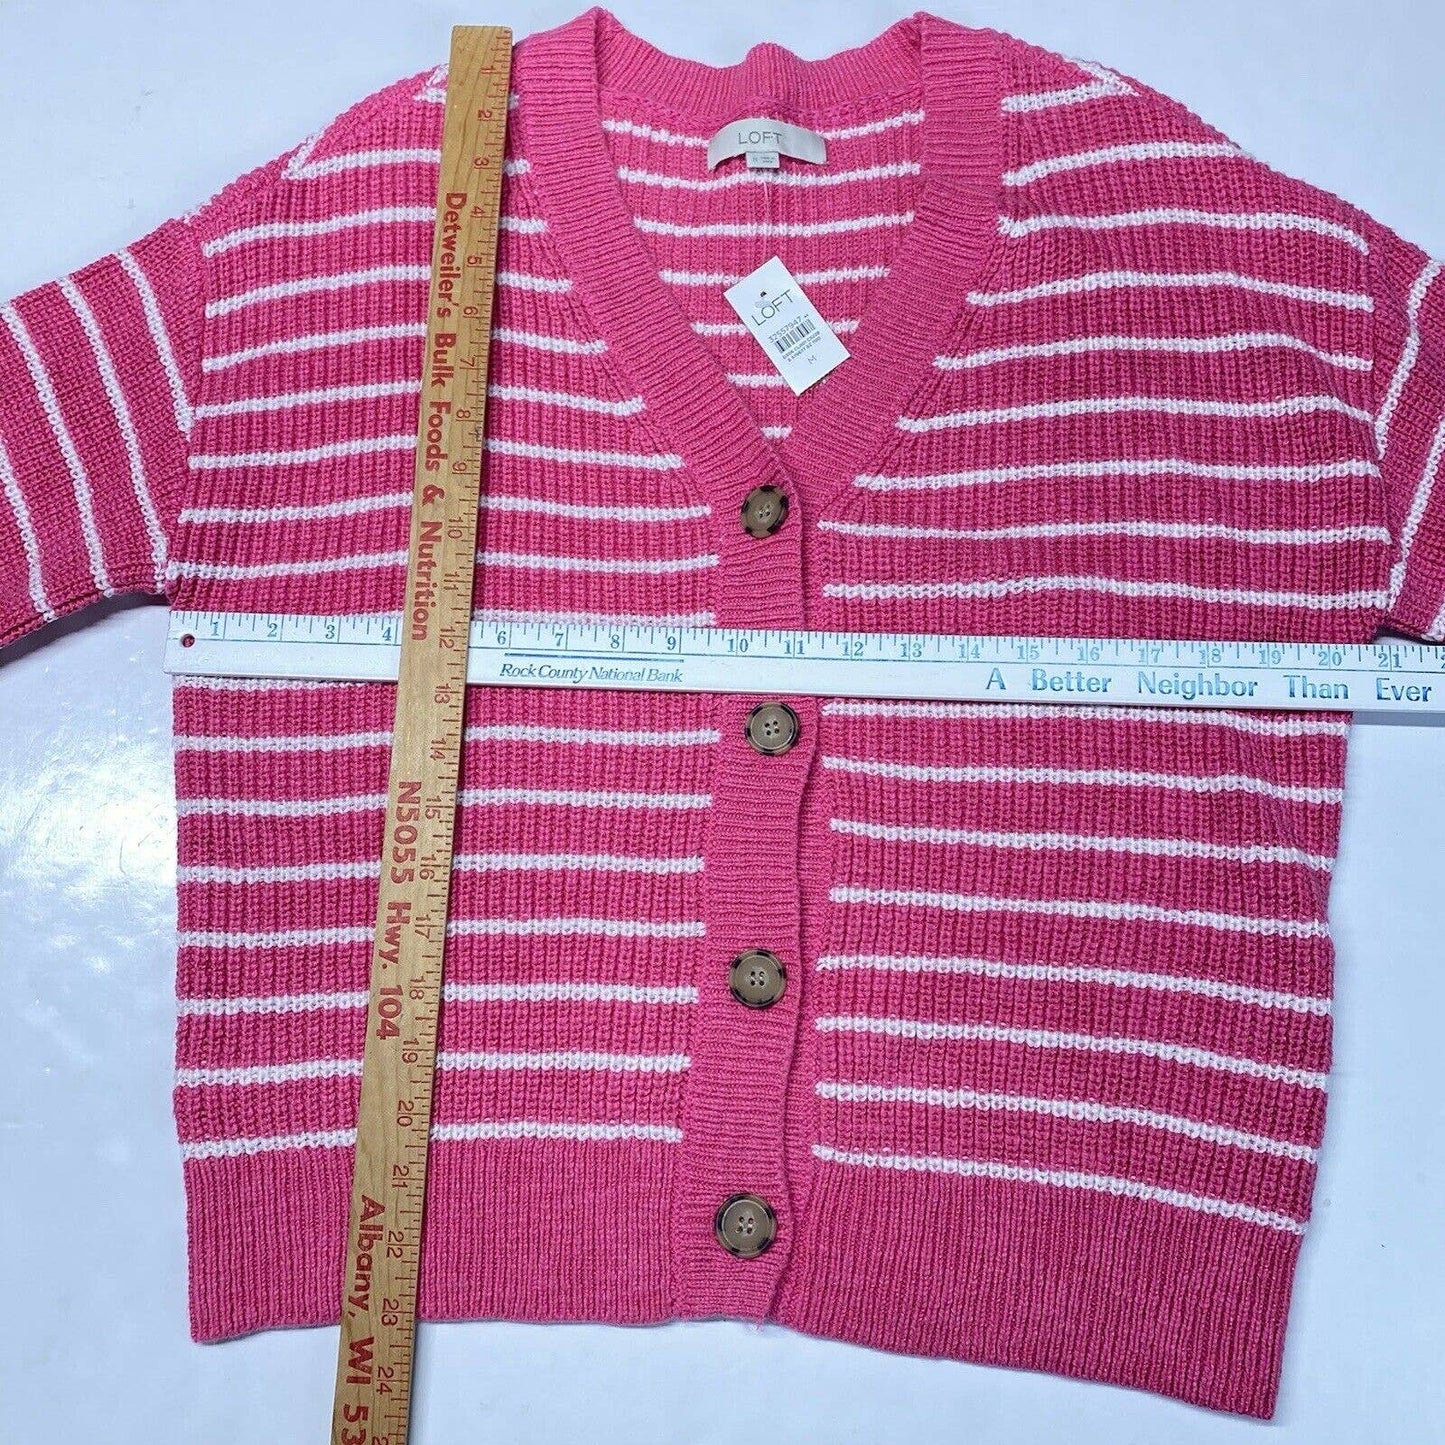 Loft Button Up Knit Cardigan Medium Pink/White Striped Long Sleeve Sweater NEW